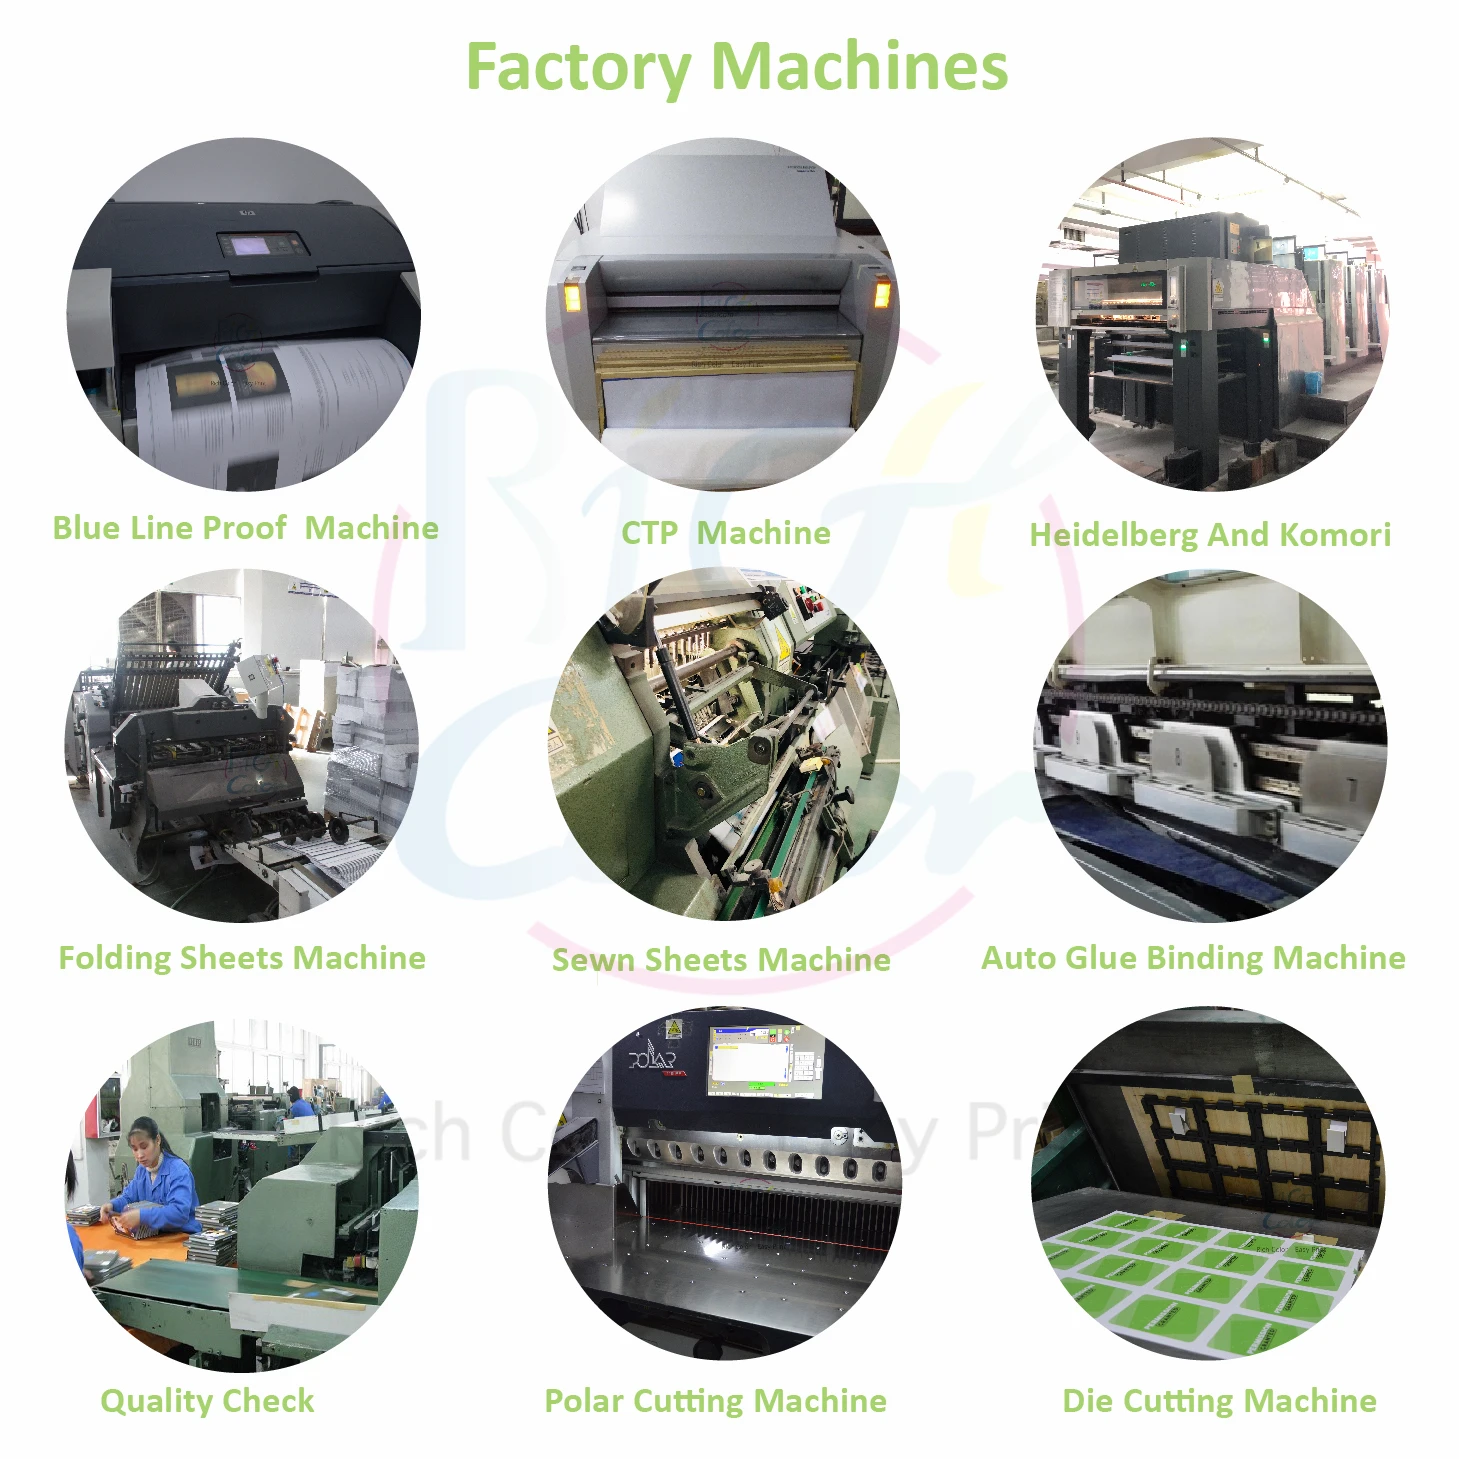 01-Factory Machines